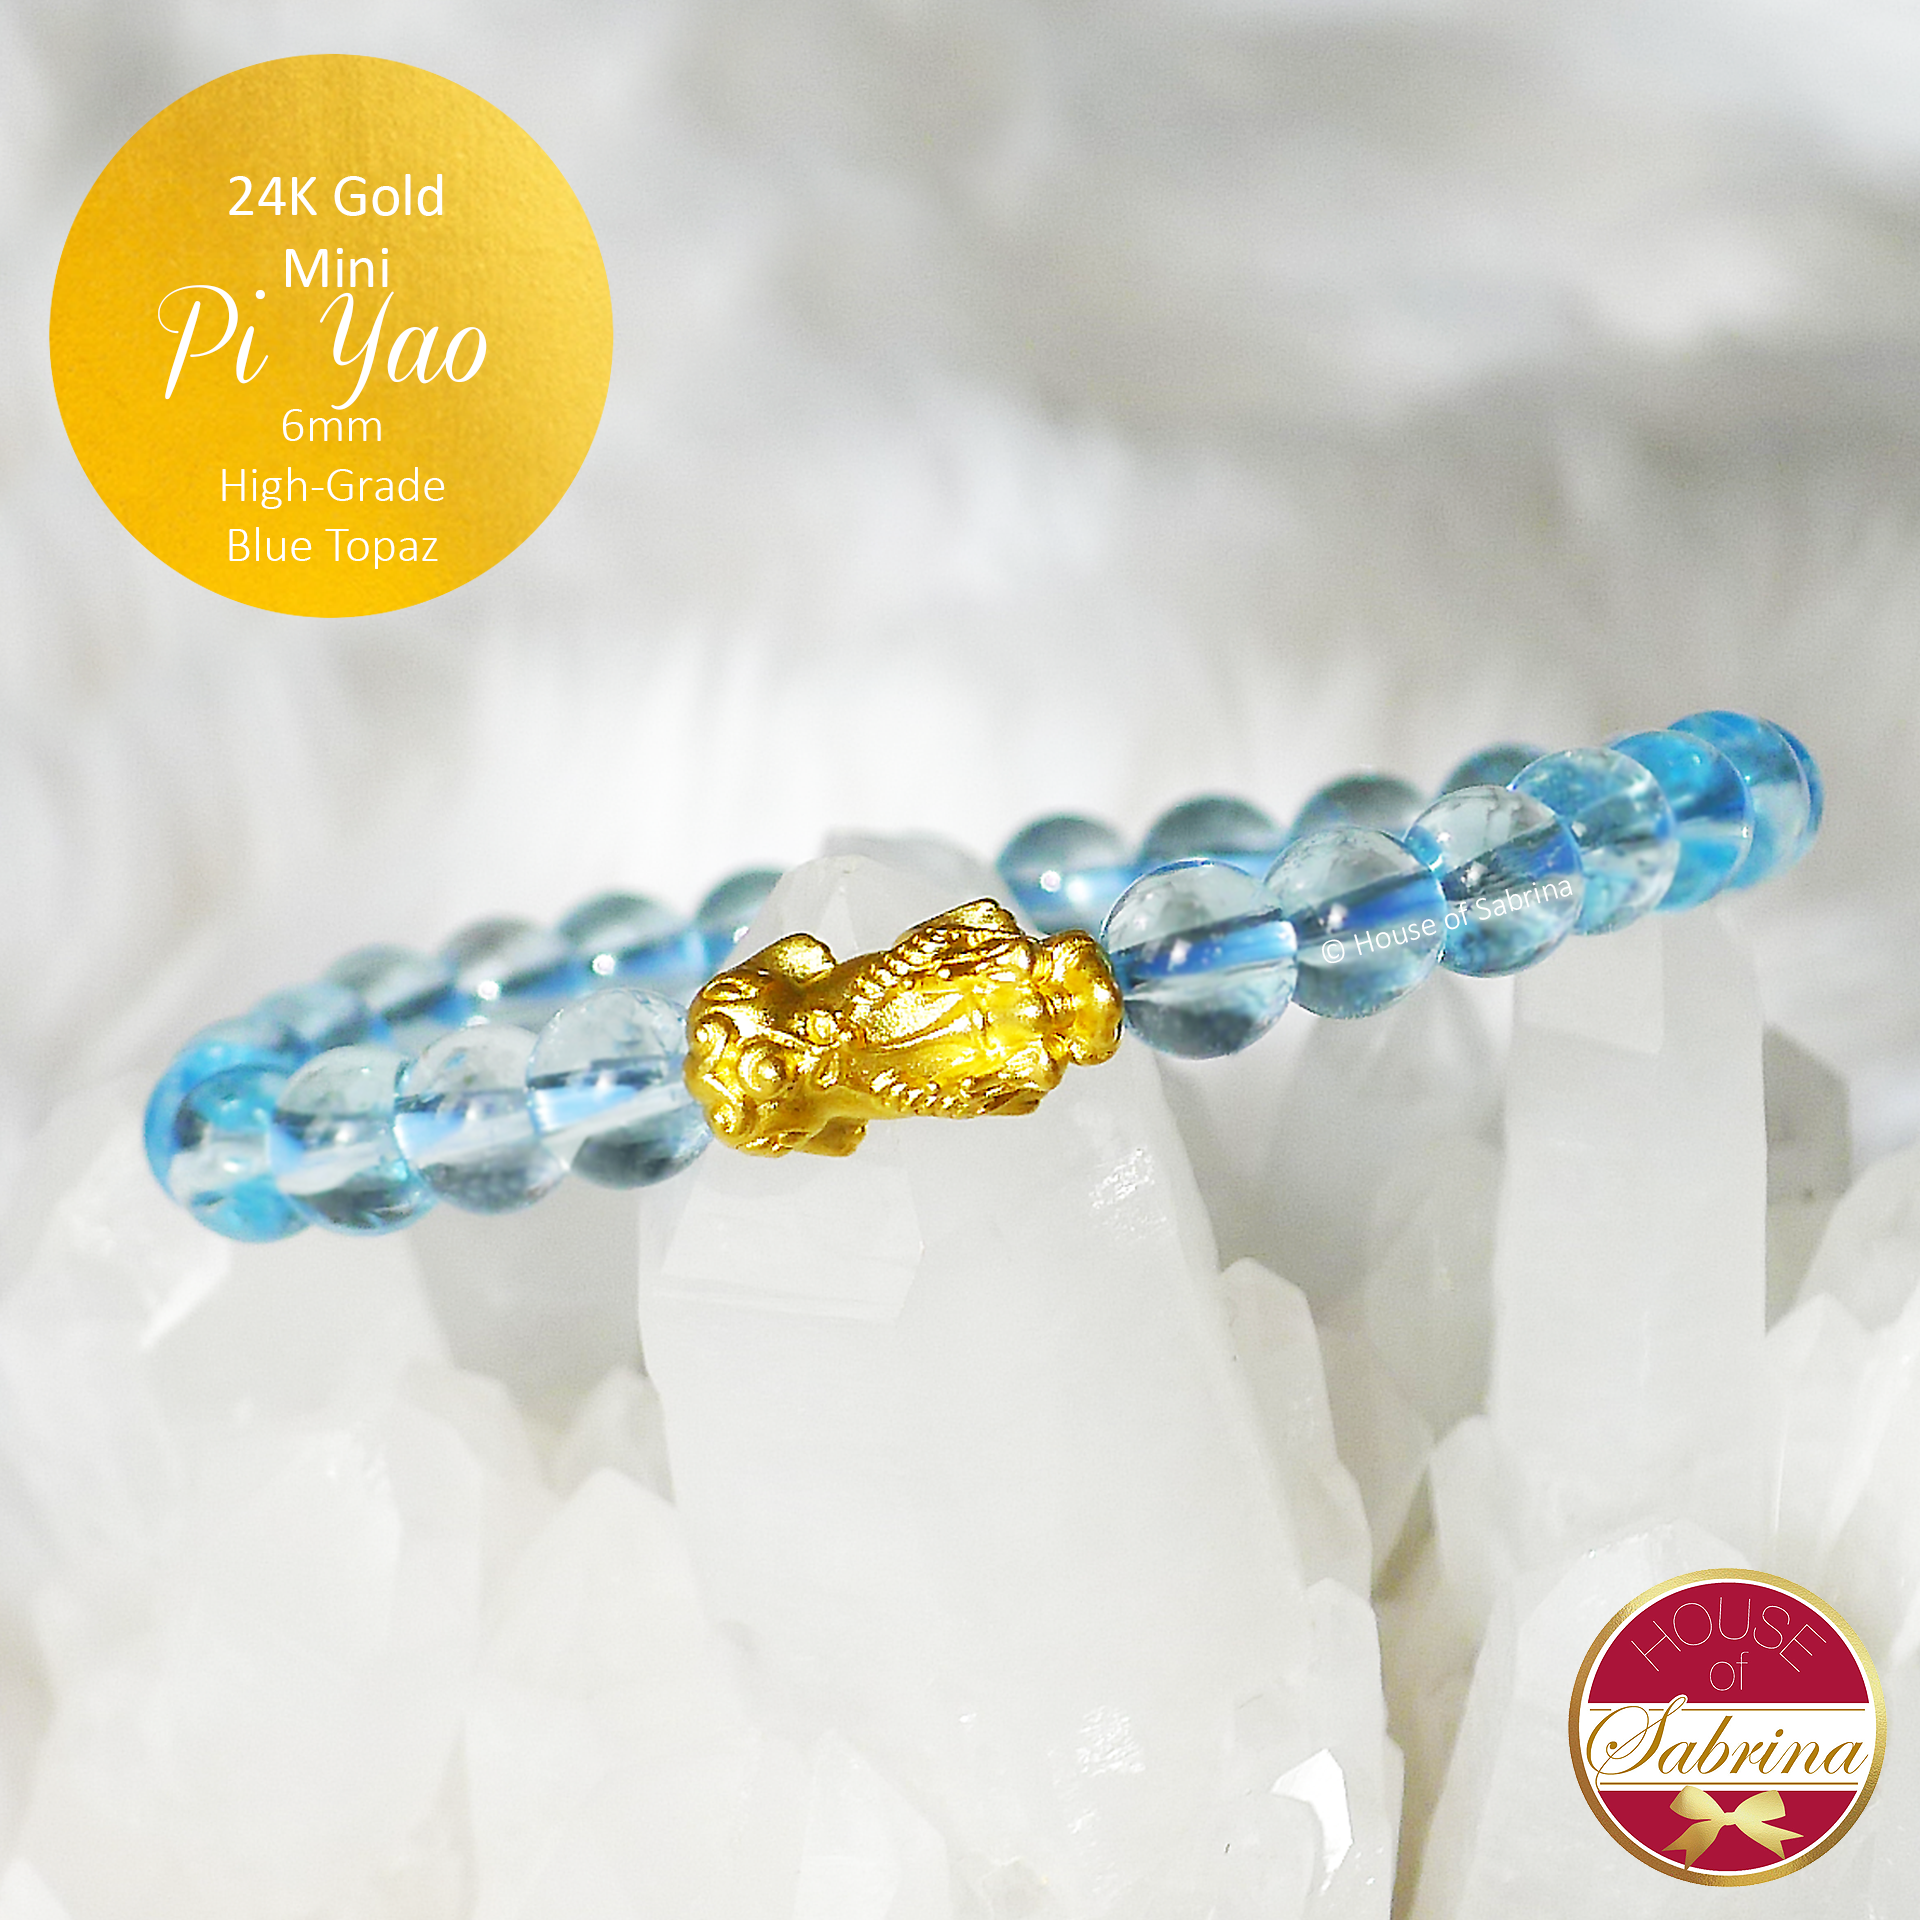 24K Gold Mini Pi Yao with High Grade Blue Topaz Gemstone Bracelet